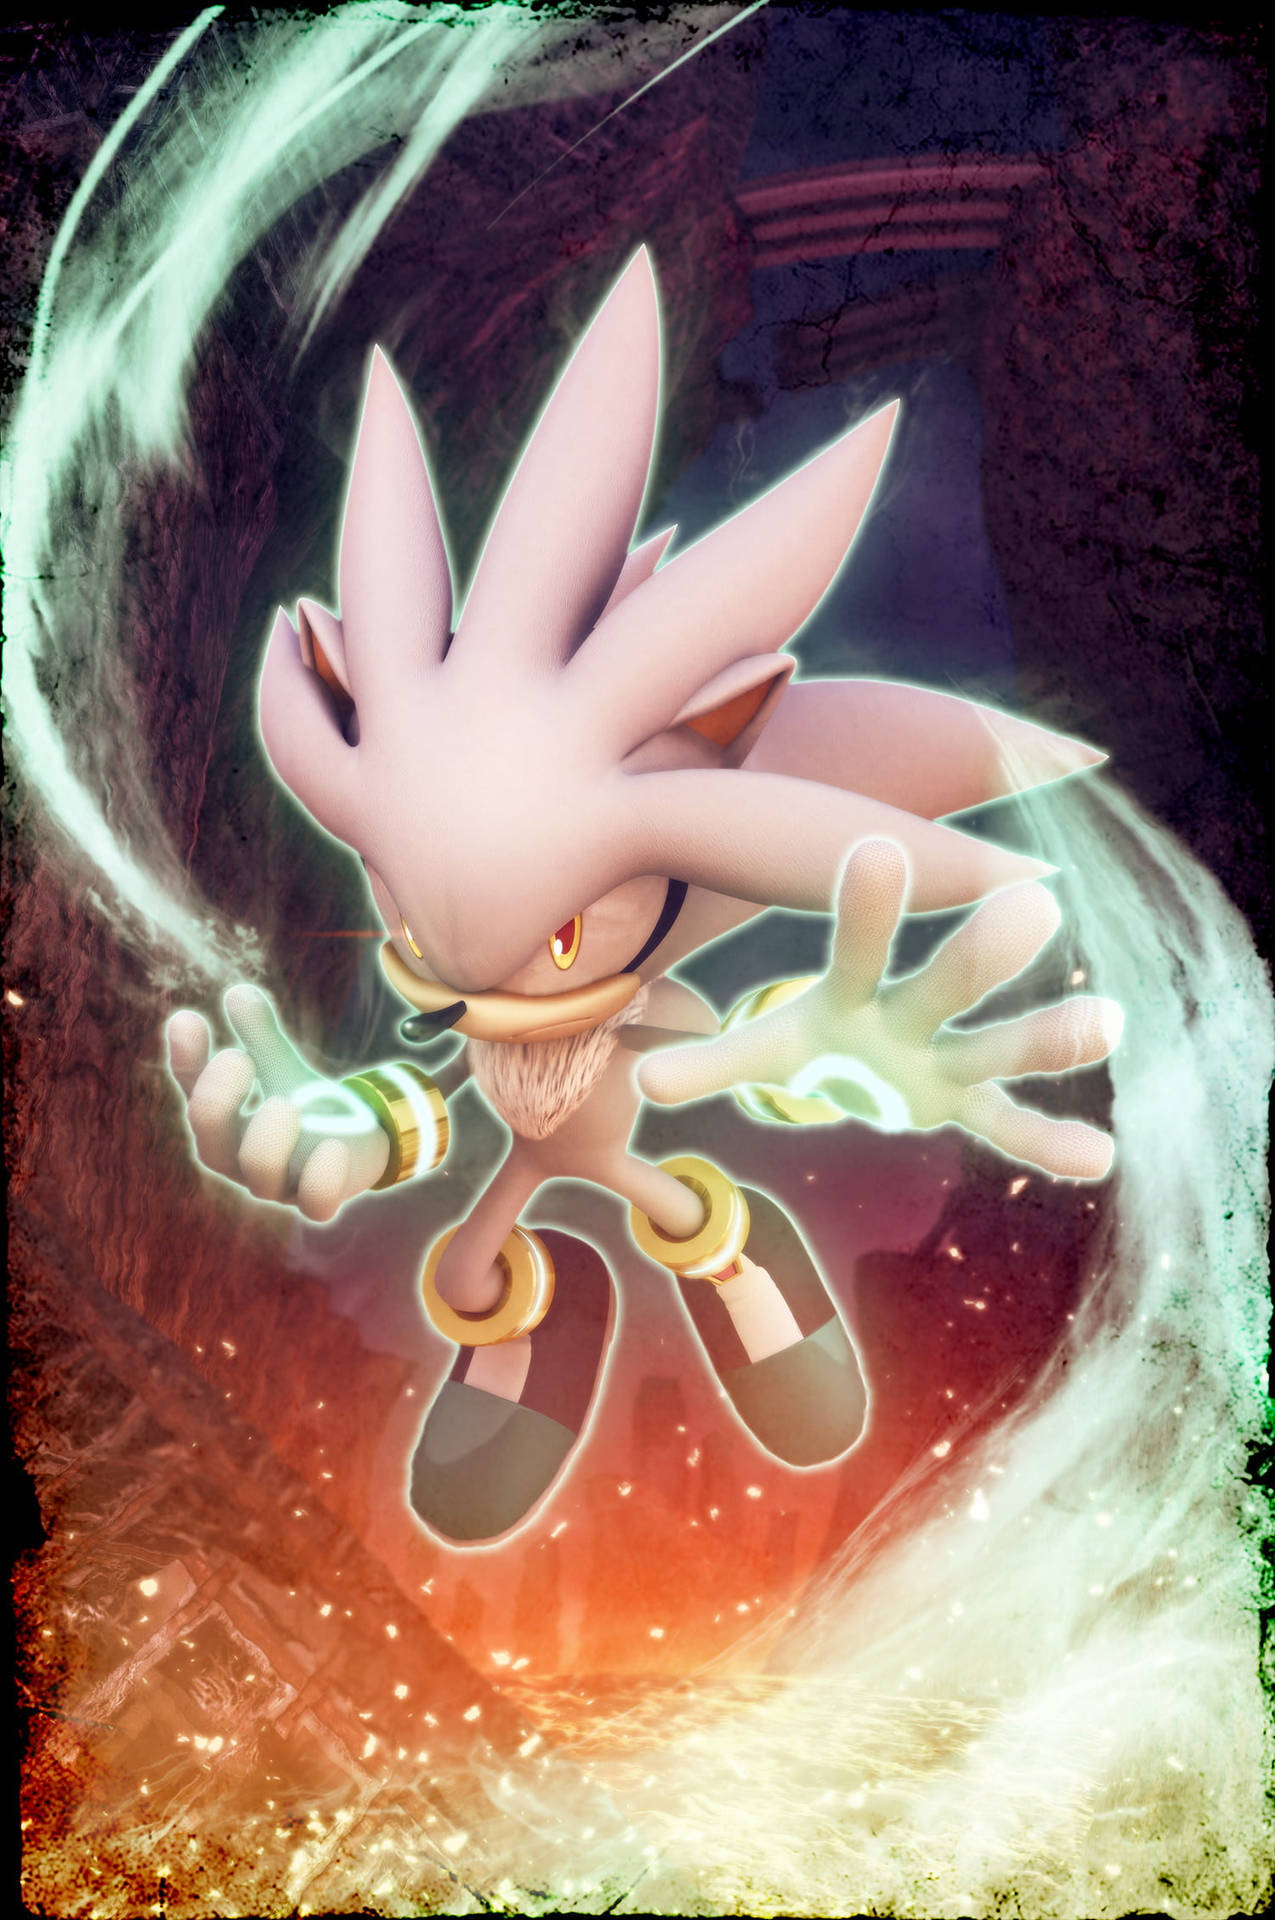 Silver Sonic The Hedgehog Wallpaper